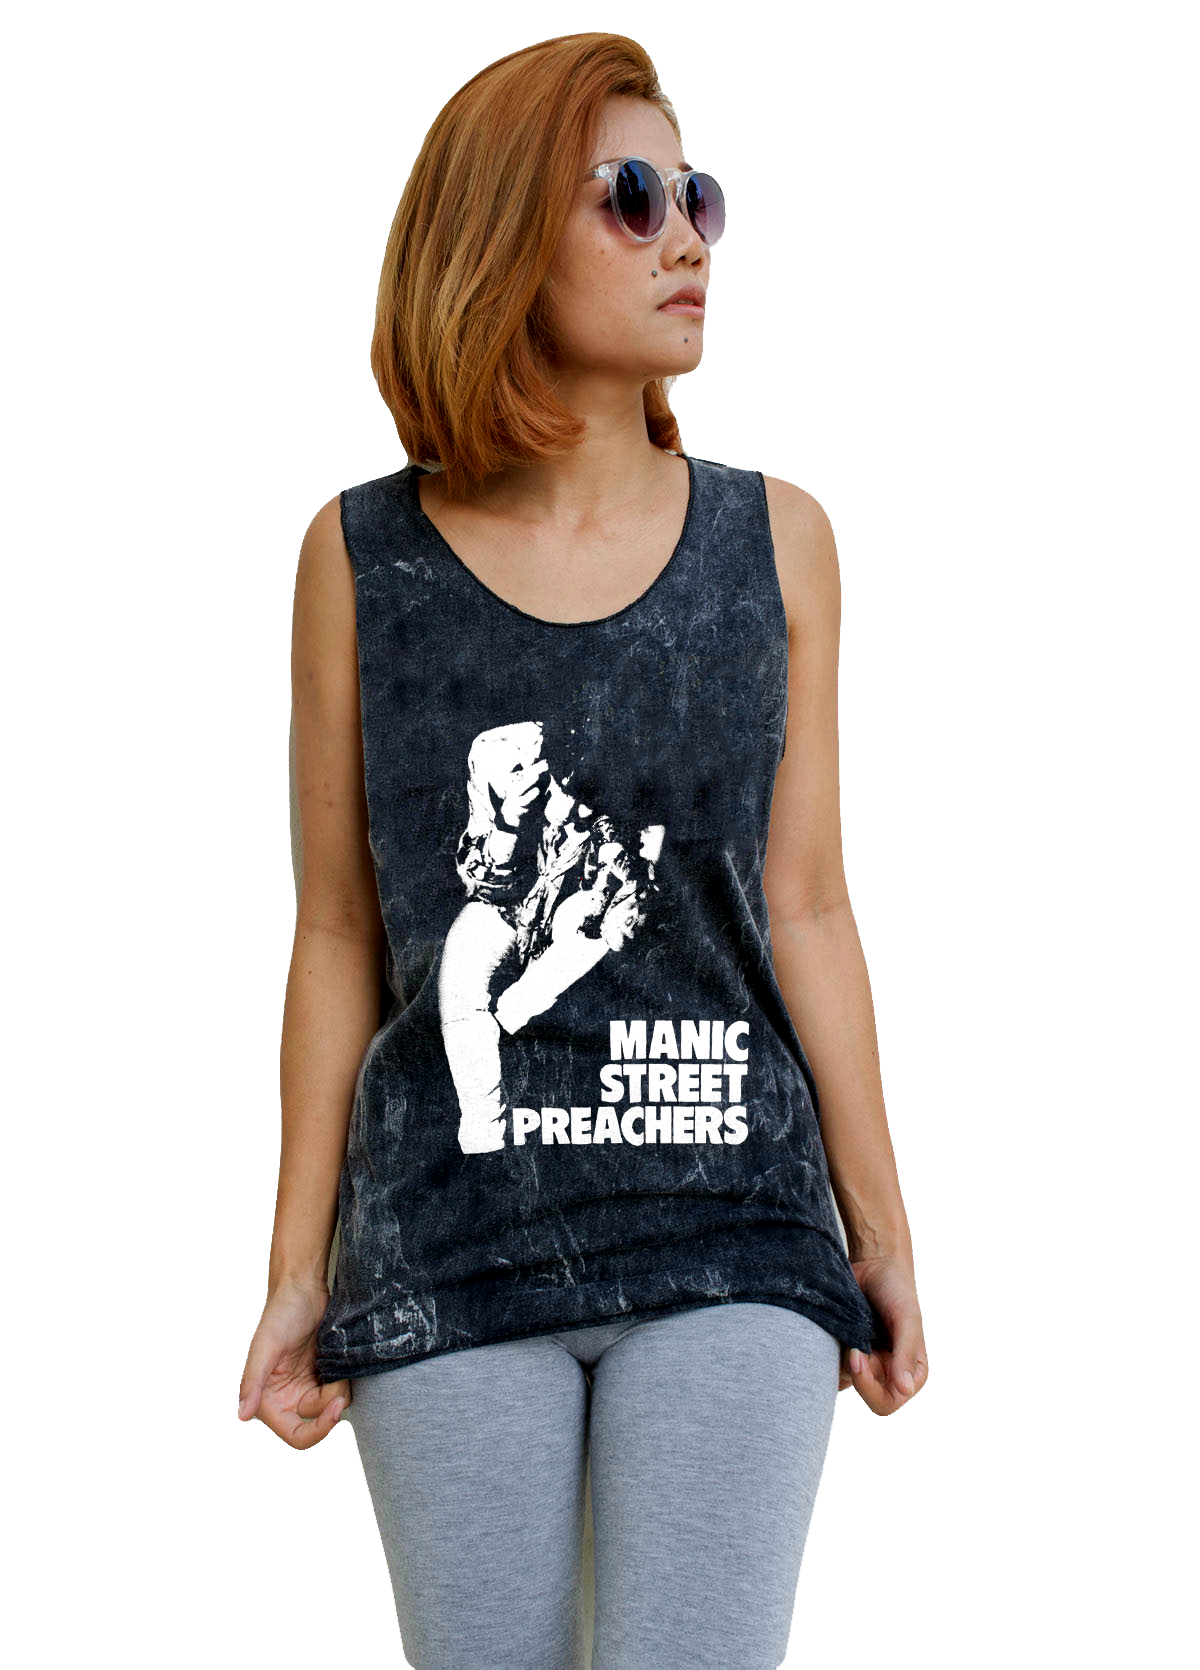 Unisex Manic Street Preachers Tank-Top Singlet vest Sleeveless T-shirt